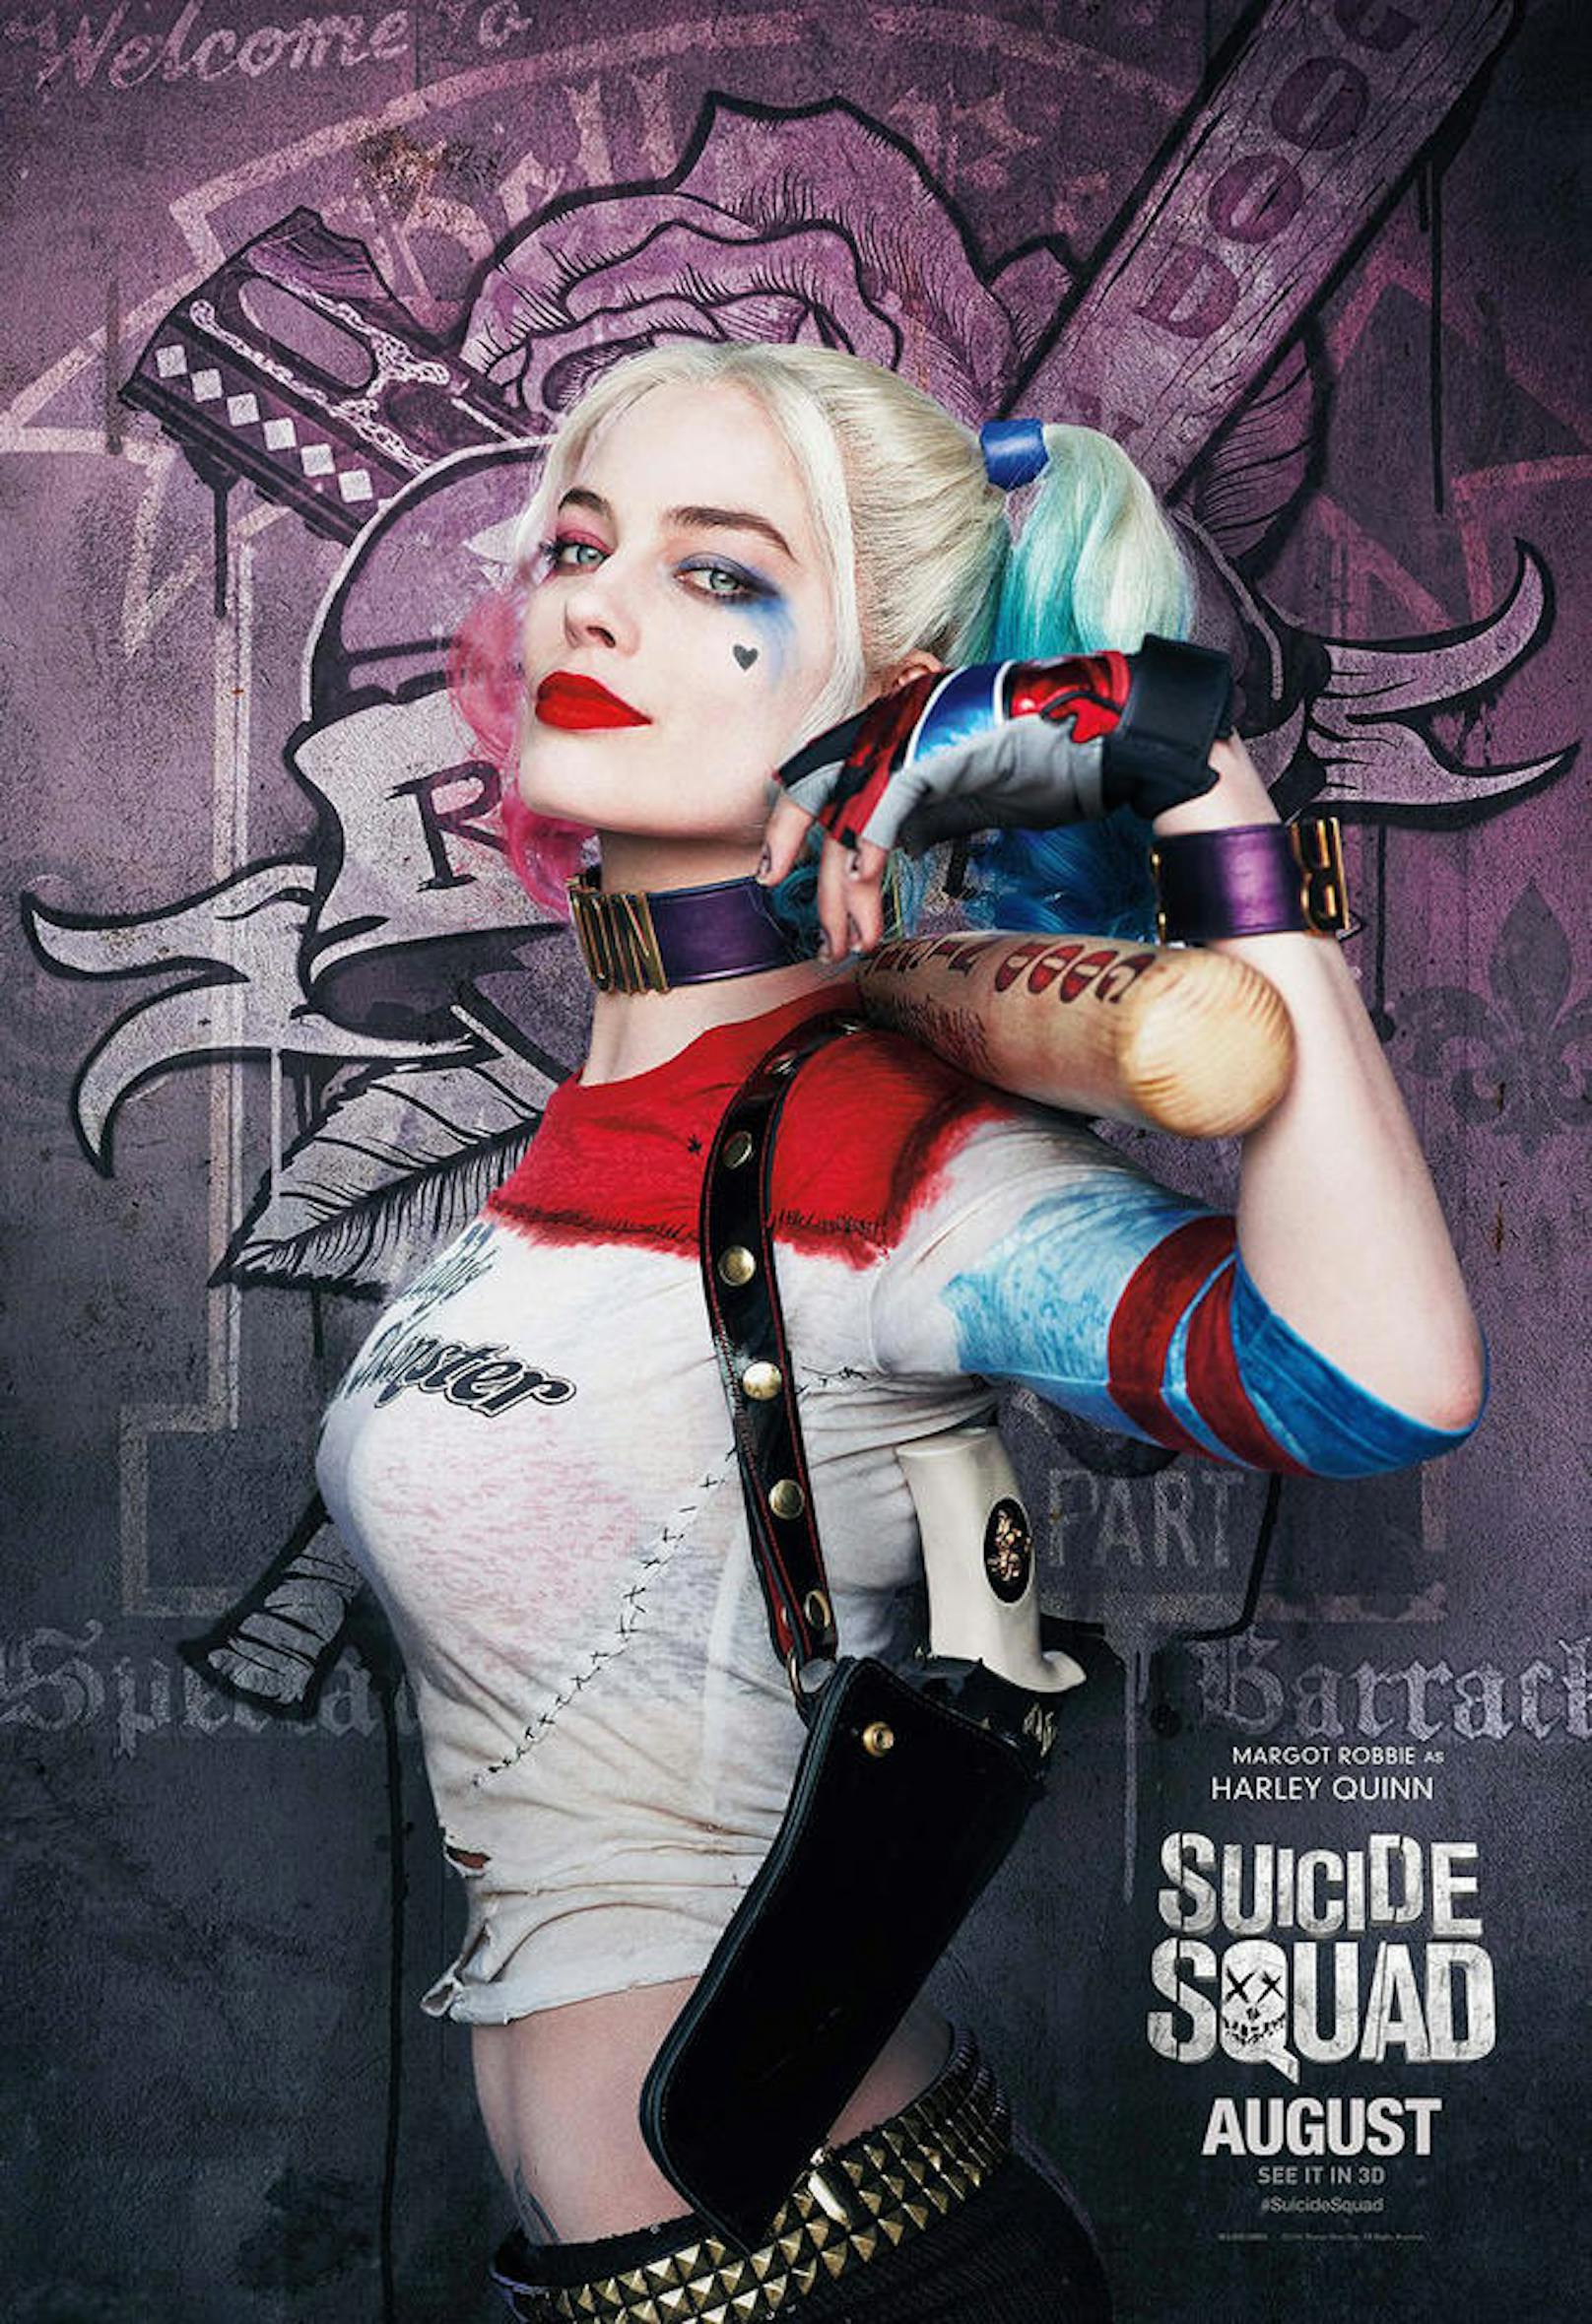 2. Harley Quinn